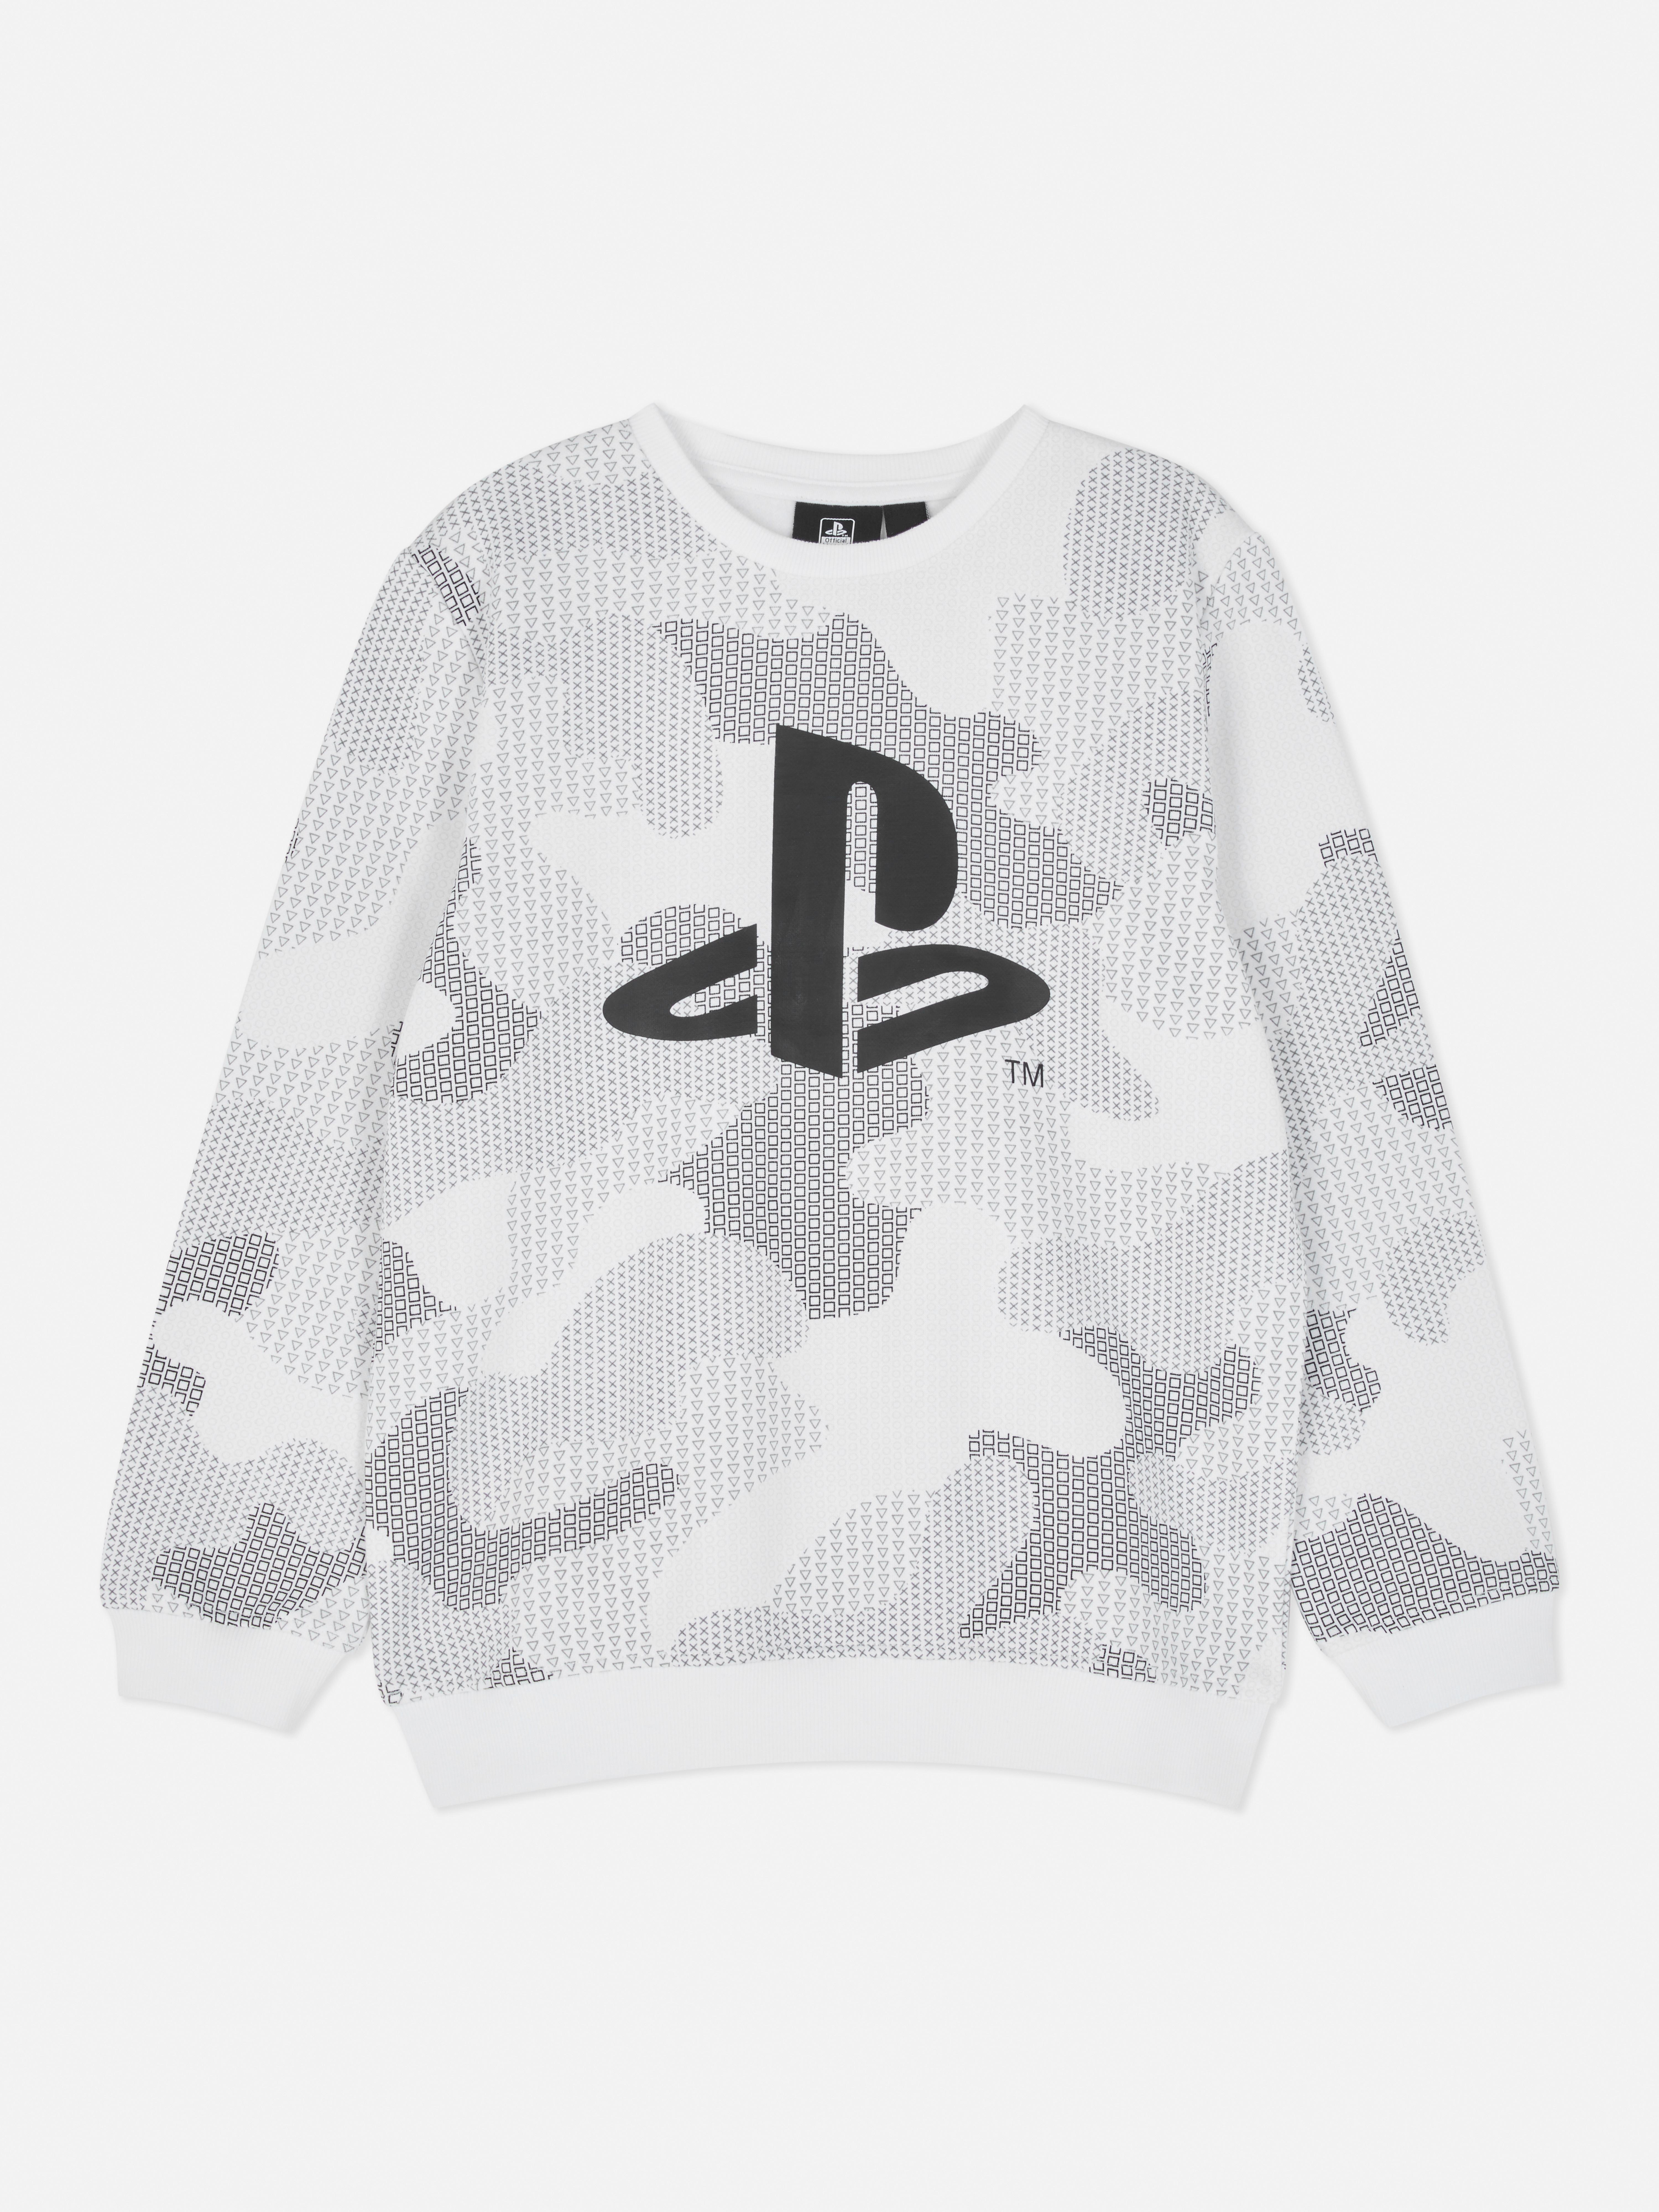 PlayStation Camo Print Sweatshirt